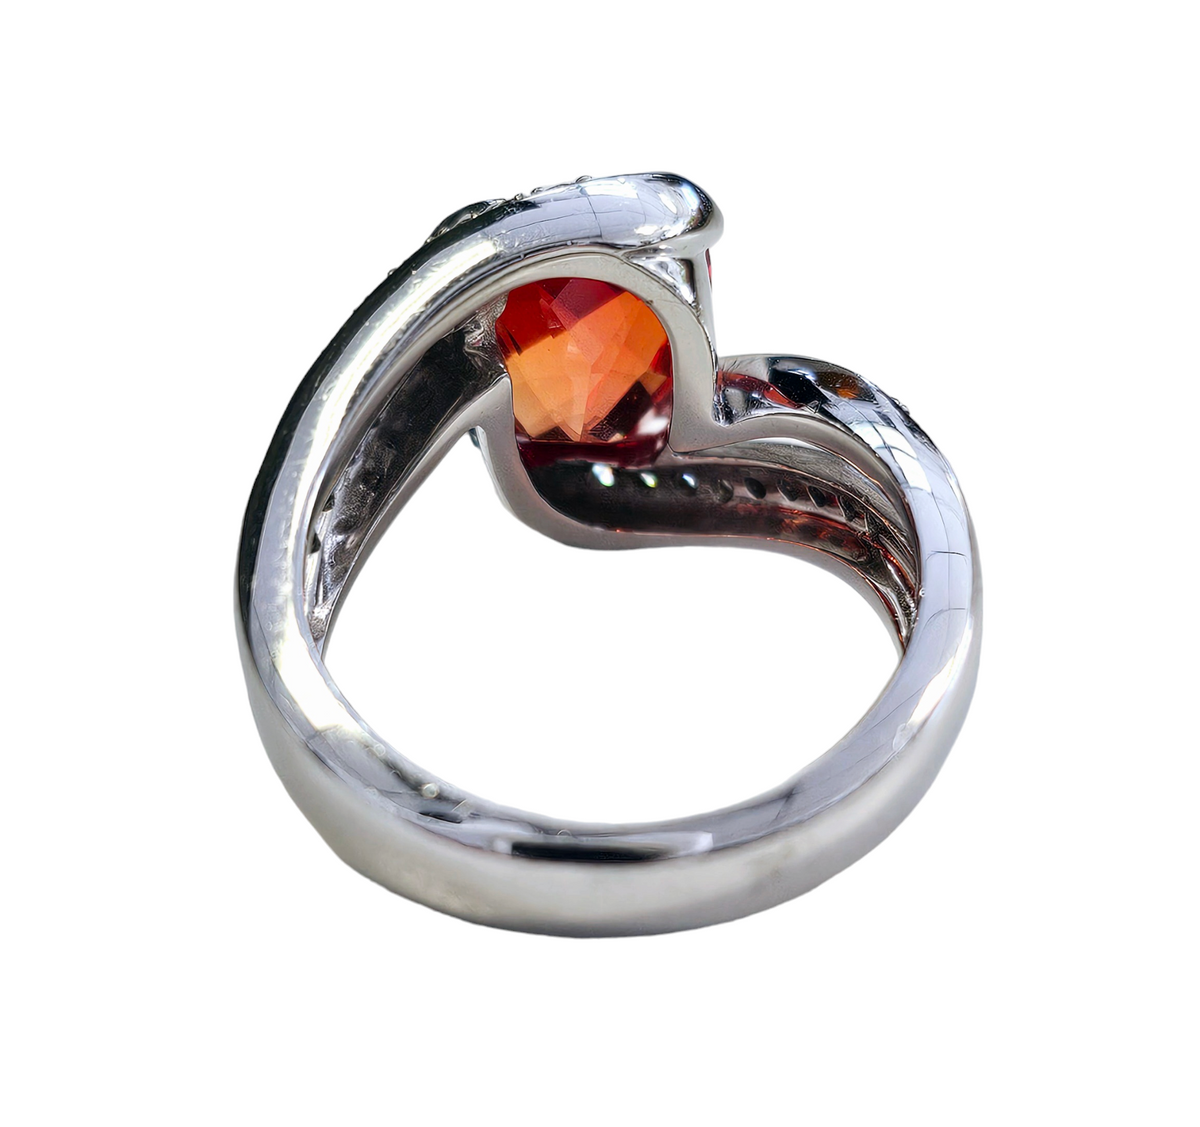 Mandarin Oval Cut Garnet and Diamond Bypass Half-Bezel Ring made in 14-Karat White Gold